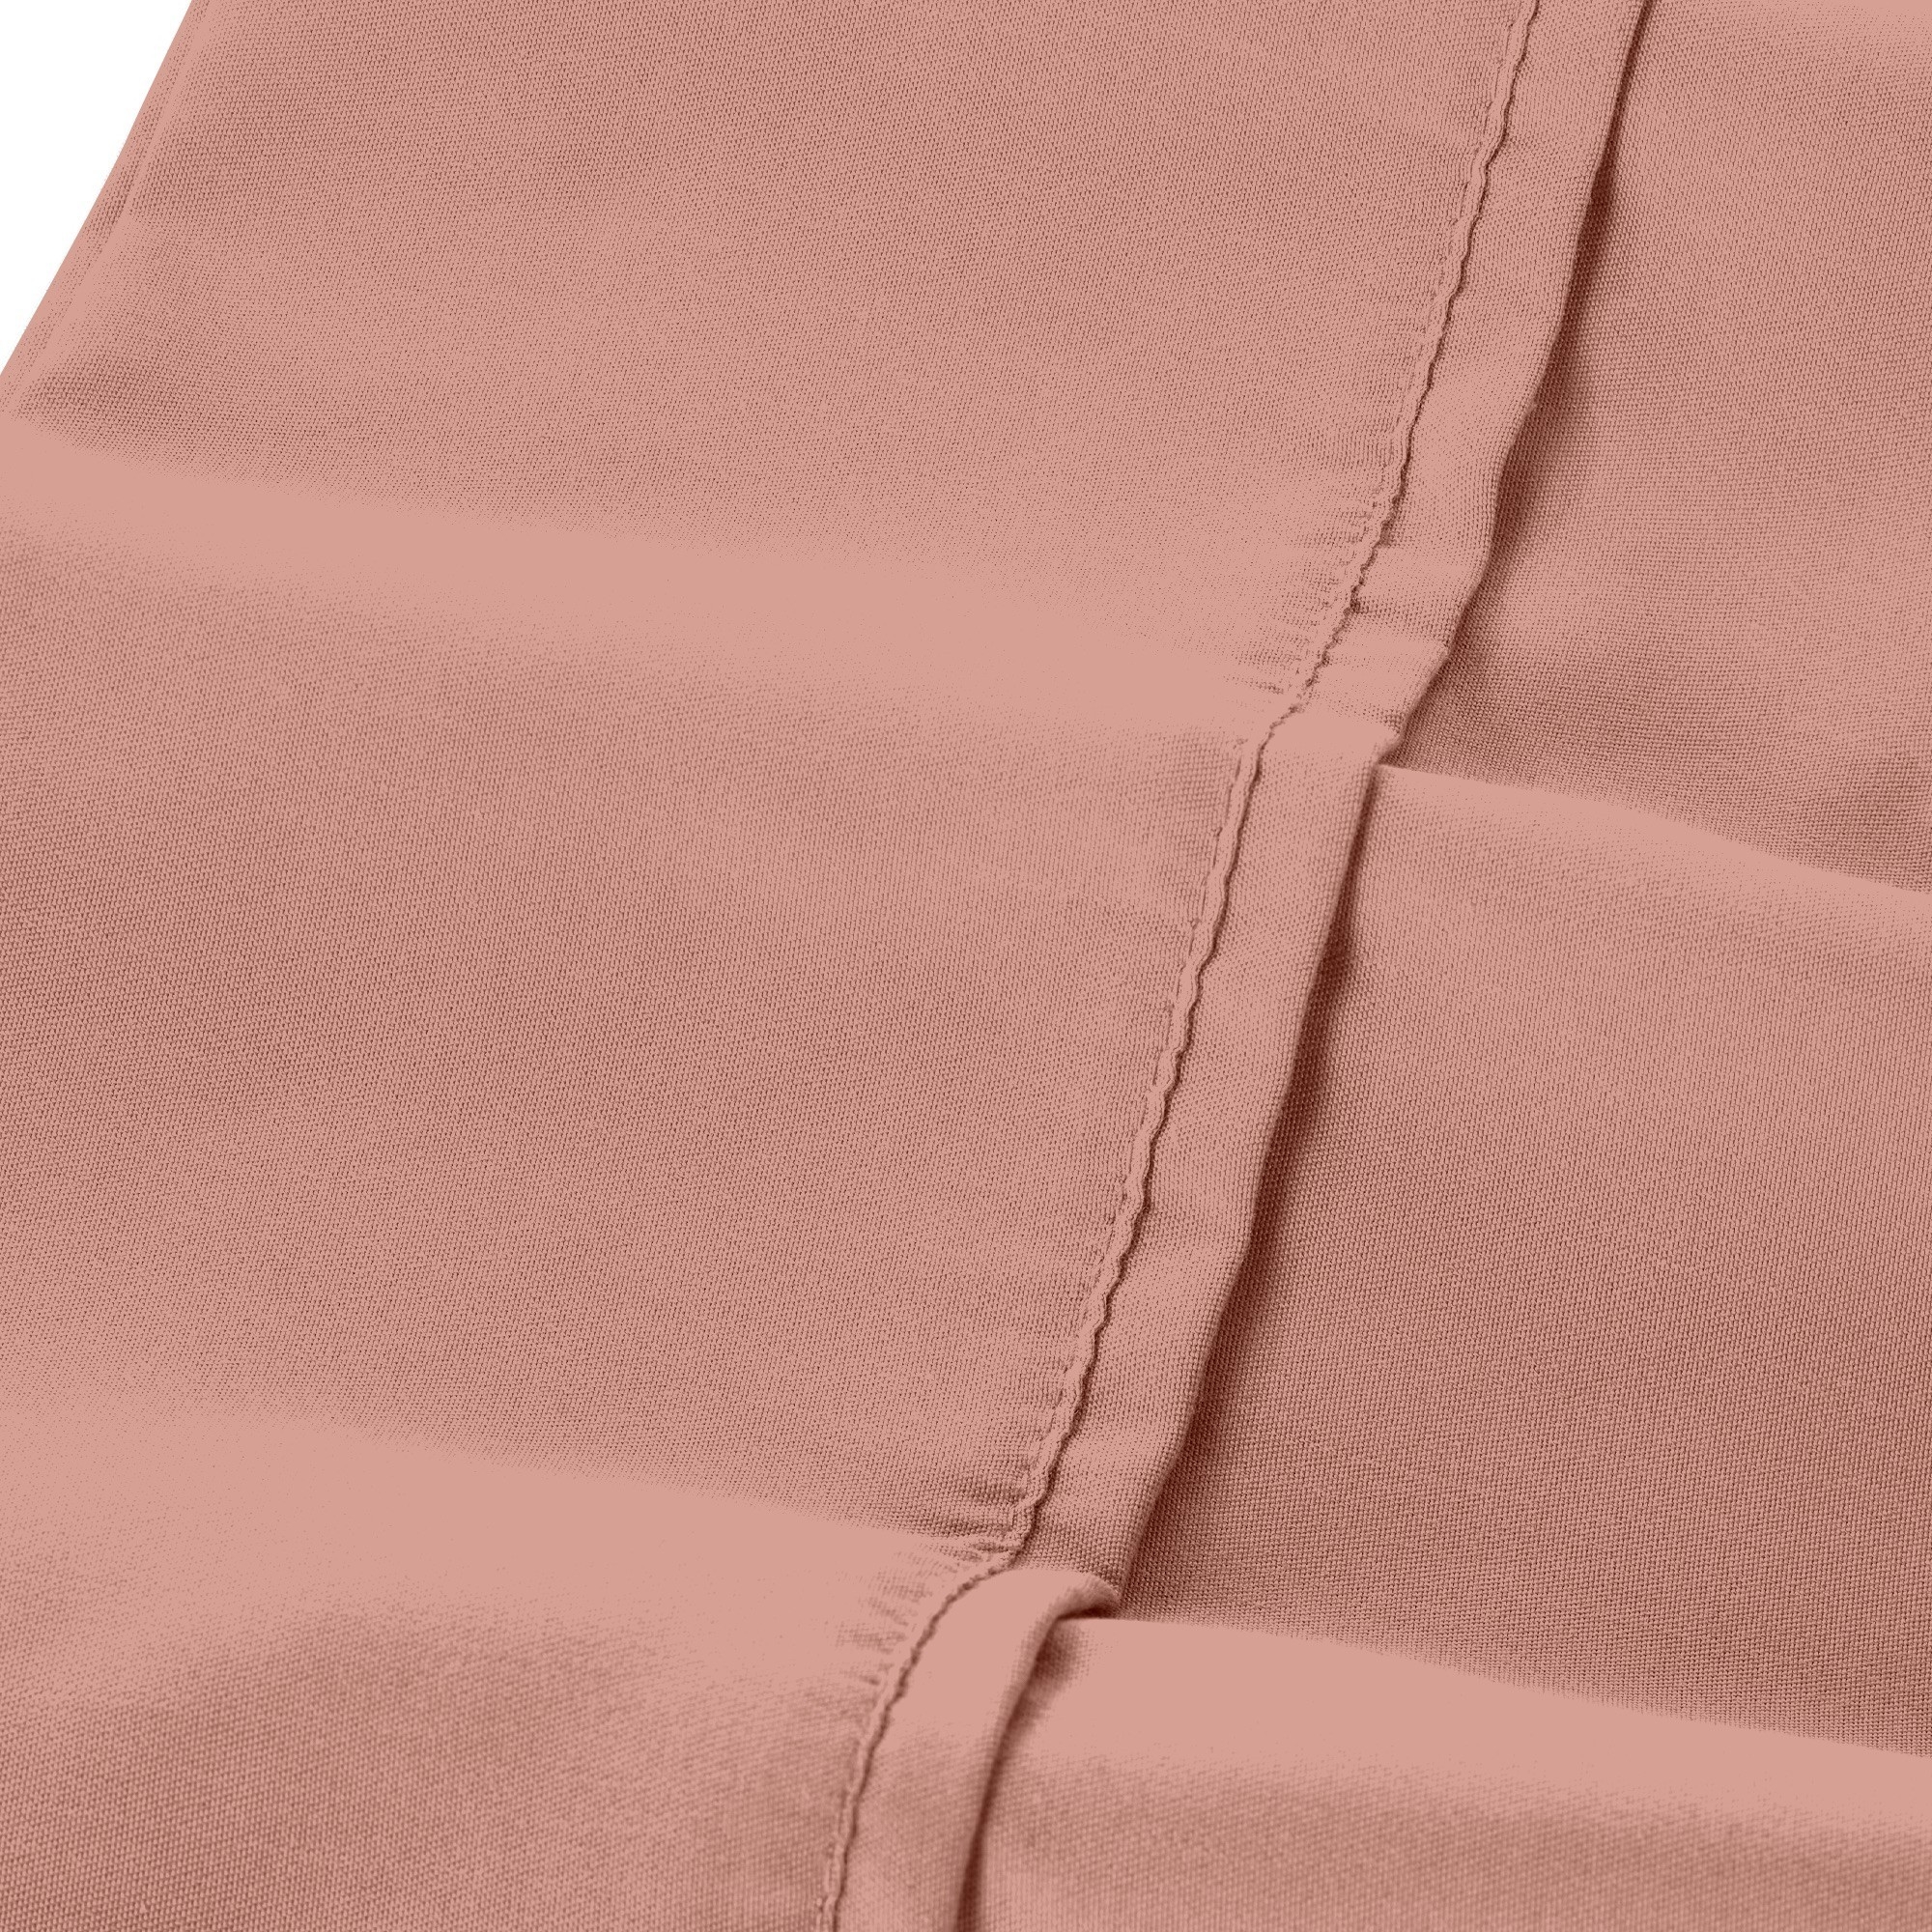 Myla 4 Piece Queen Size Sheet Set, Stitched, Elastic, Silky Pink Microfiber- Saltoro Sherpi